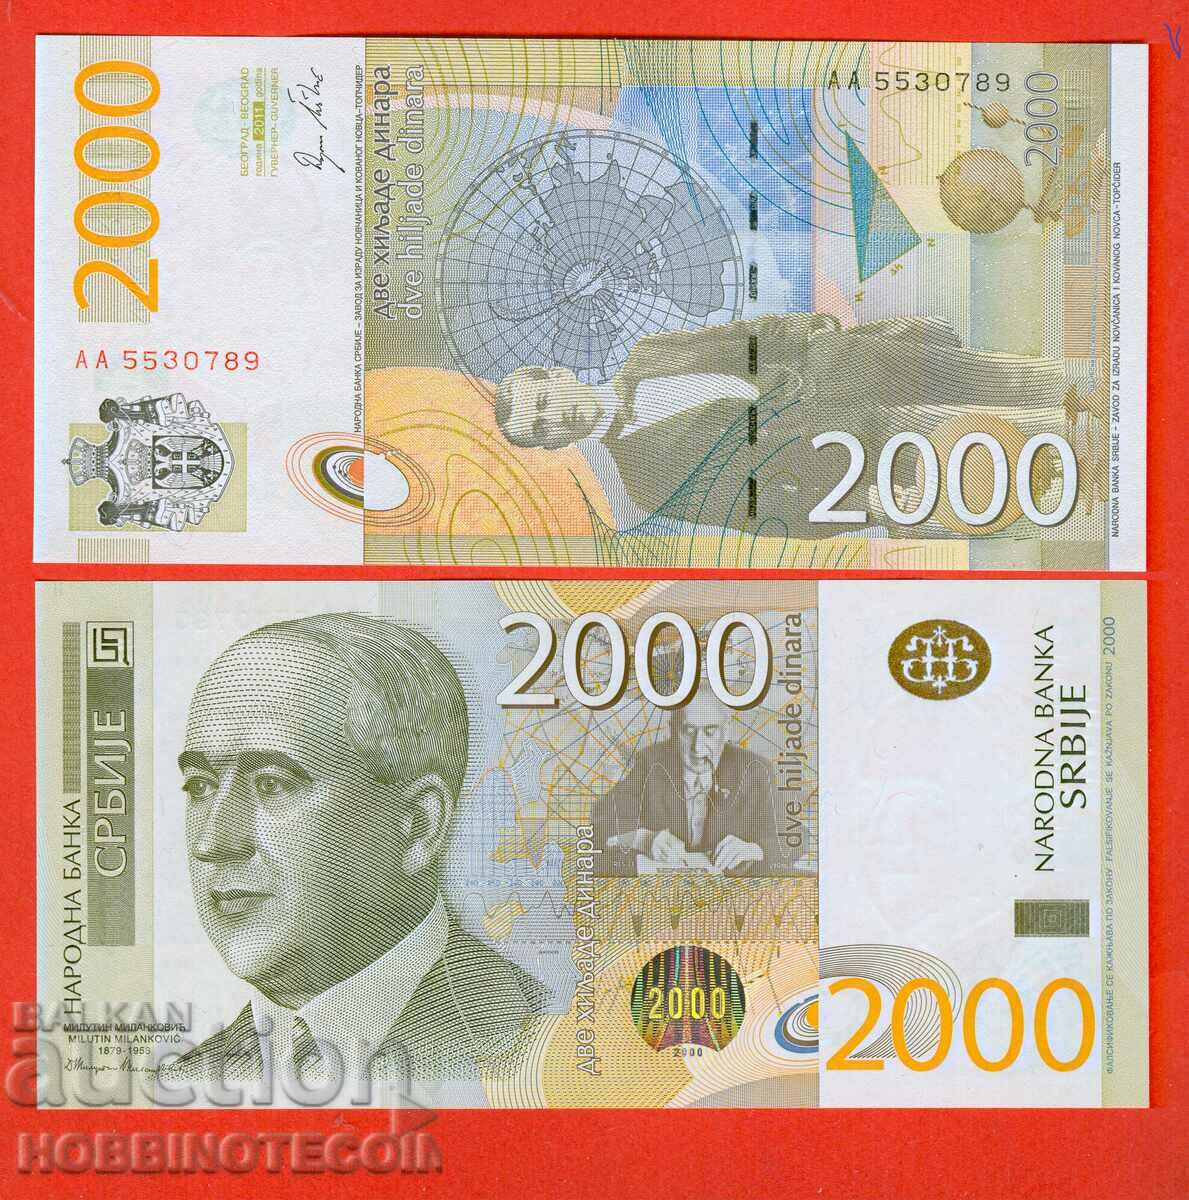 SERBIA SERBIA 2000 - 2,000 Dinars issue 2011 NEW UNC